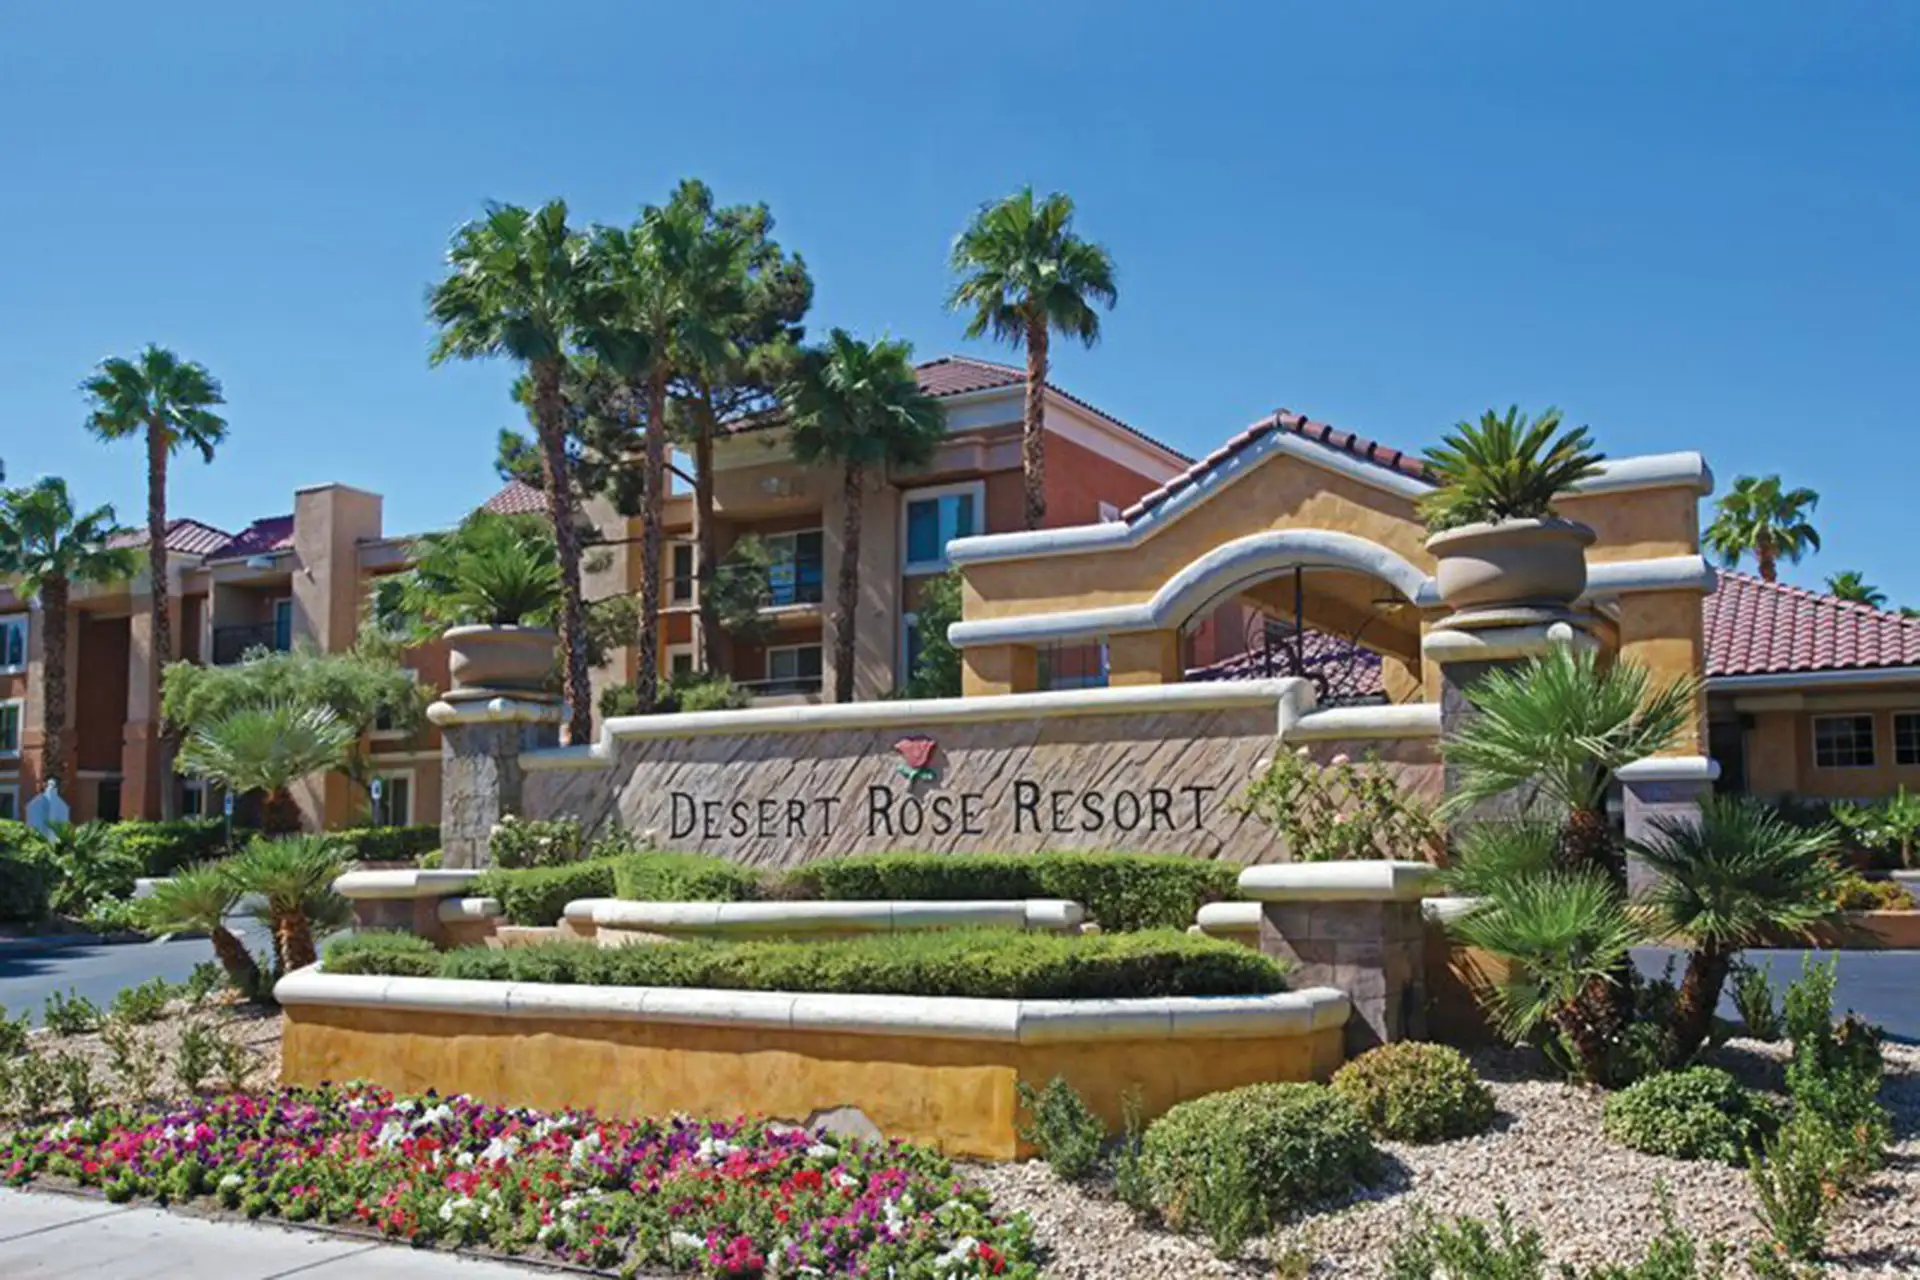 Entrance at Desert Rose Resort in Las Vegas